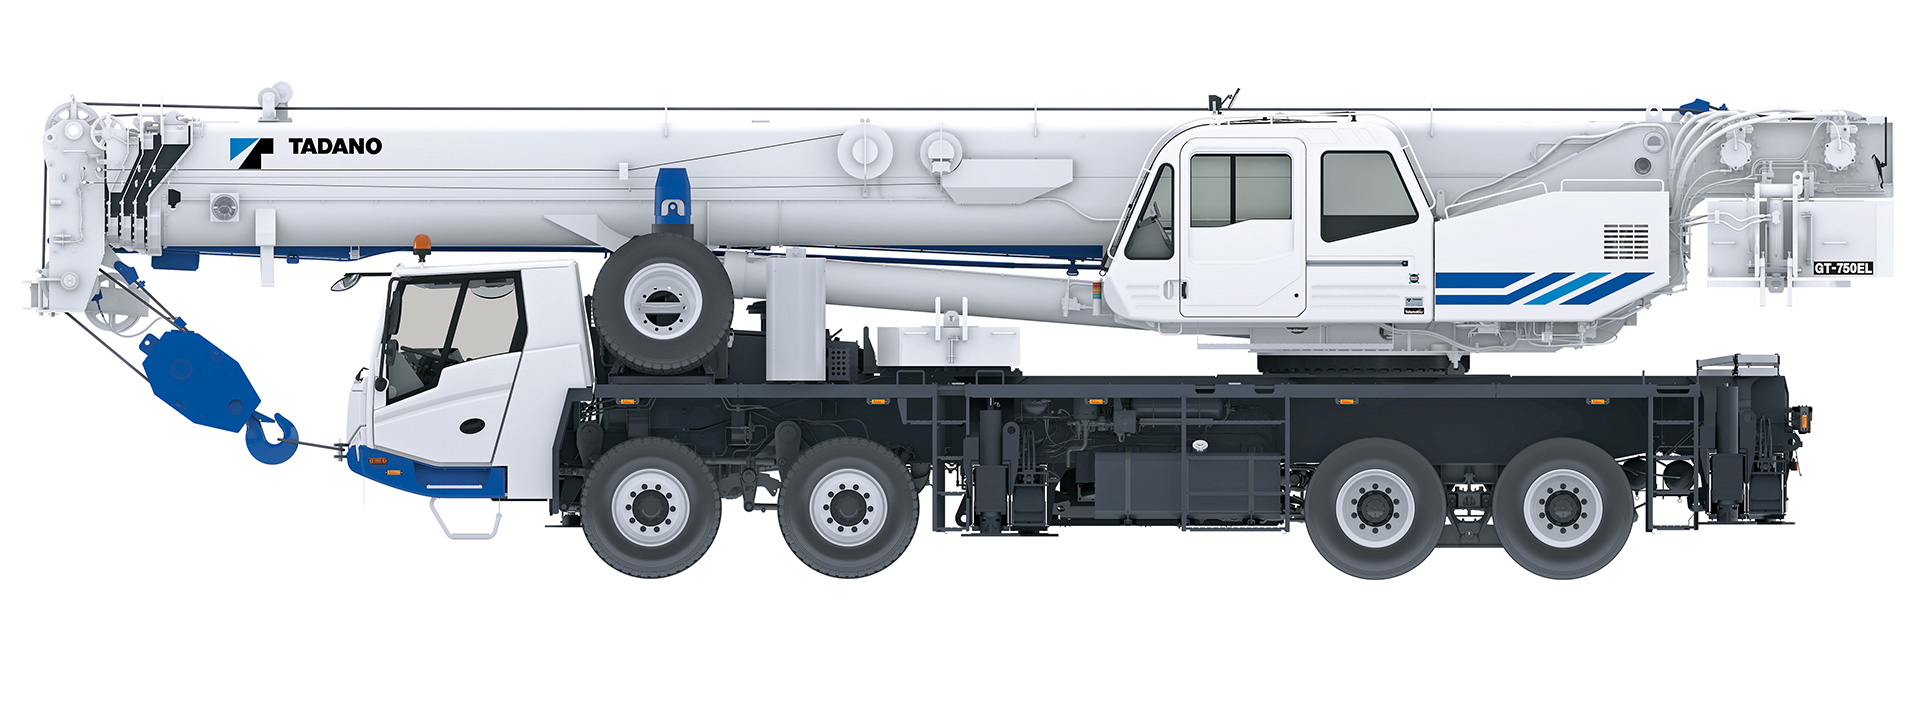 Tadano Truck Crane GT-750ER-3 (Right-hand drive)